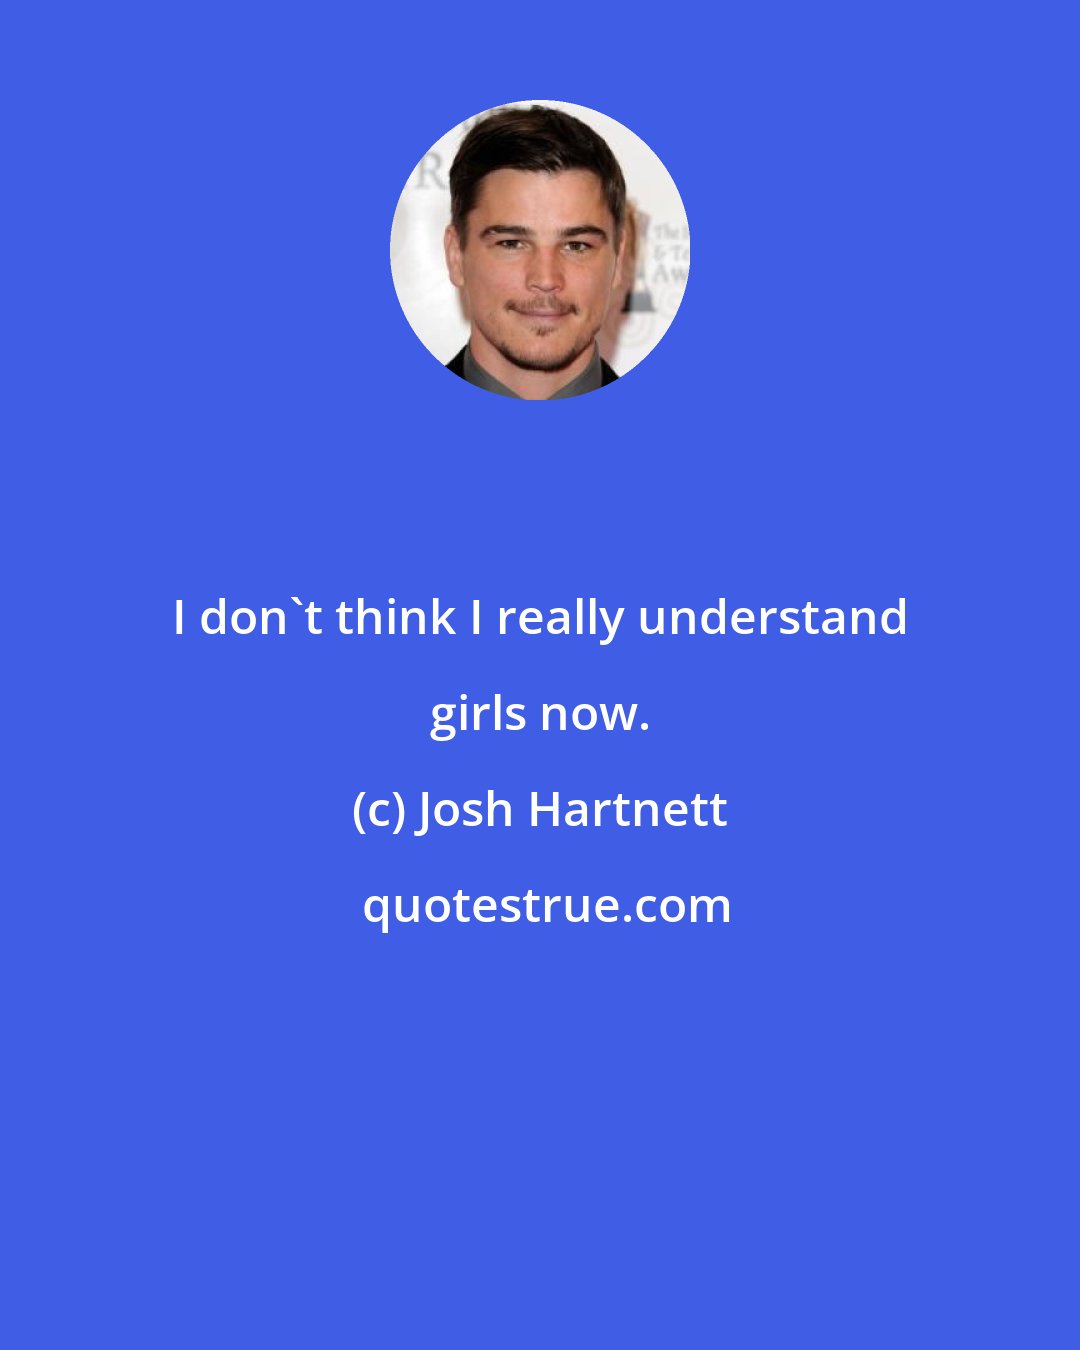 Josh Hartnett: I don't think I really understand girls now.